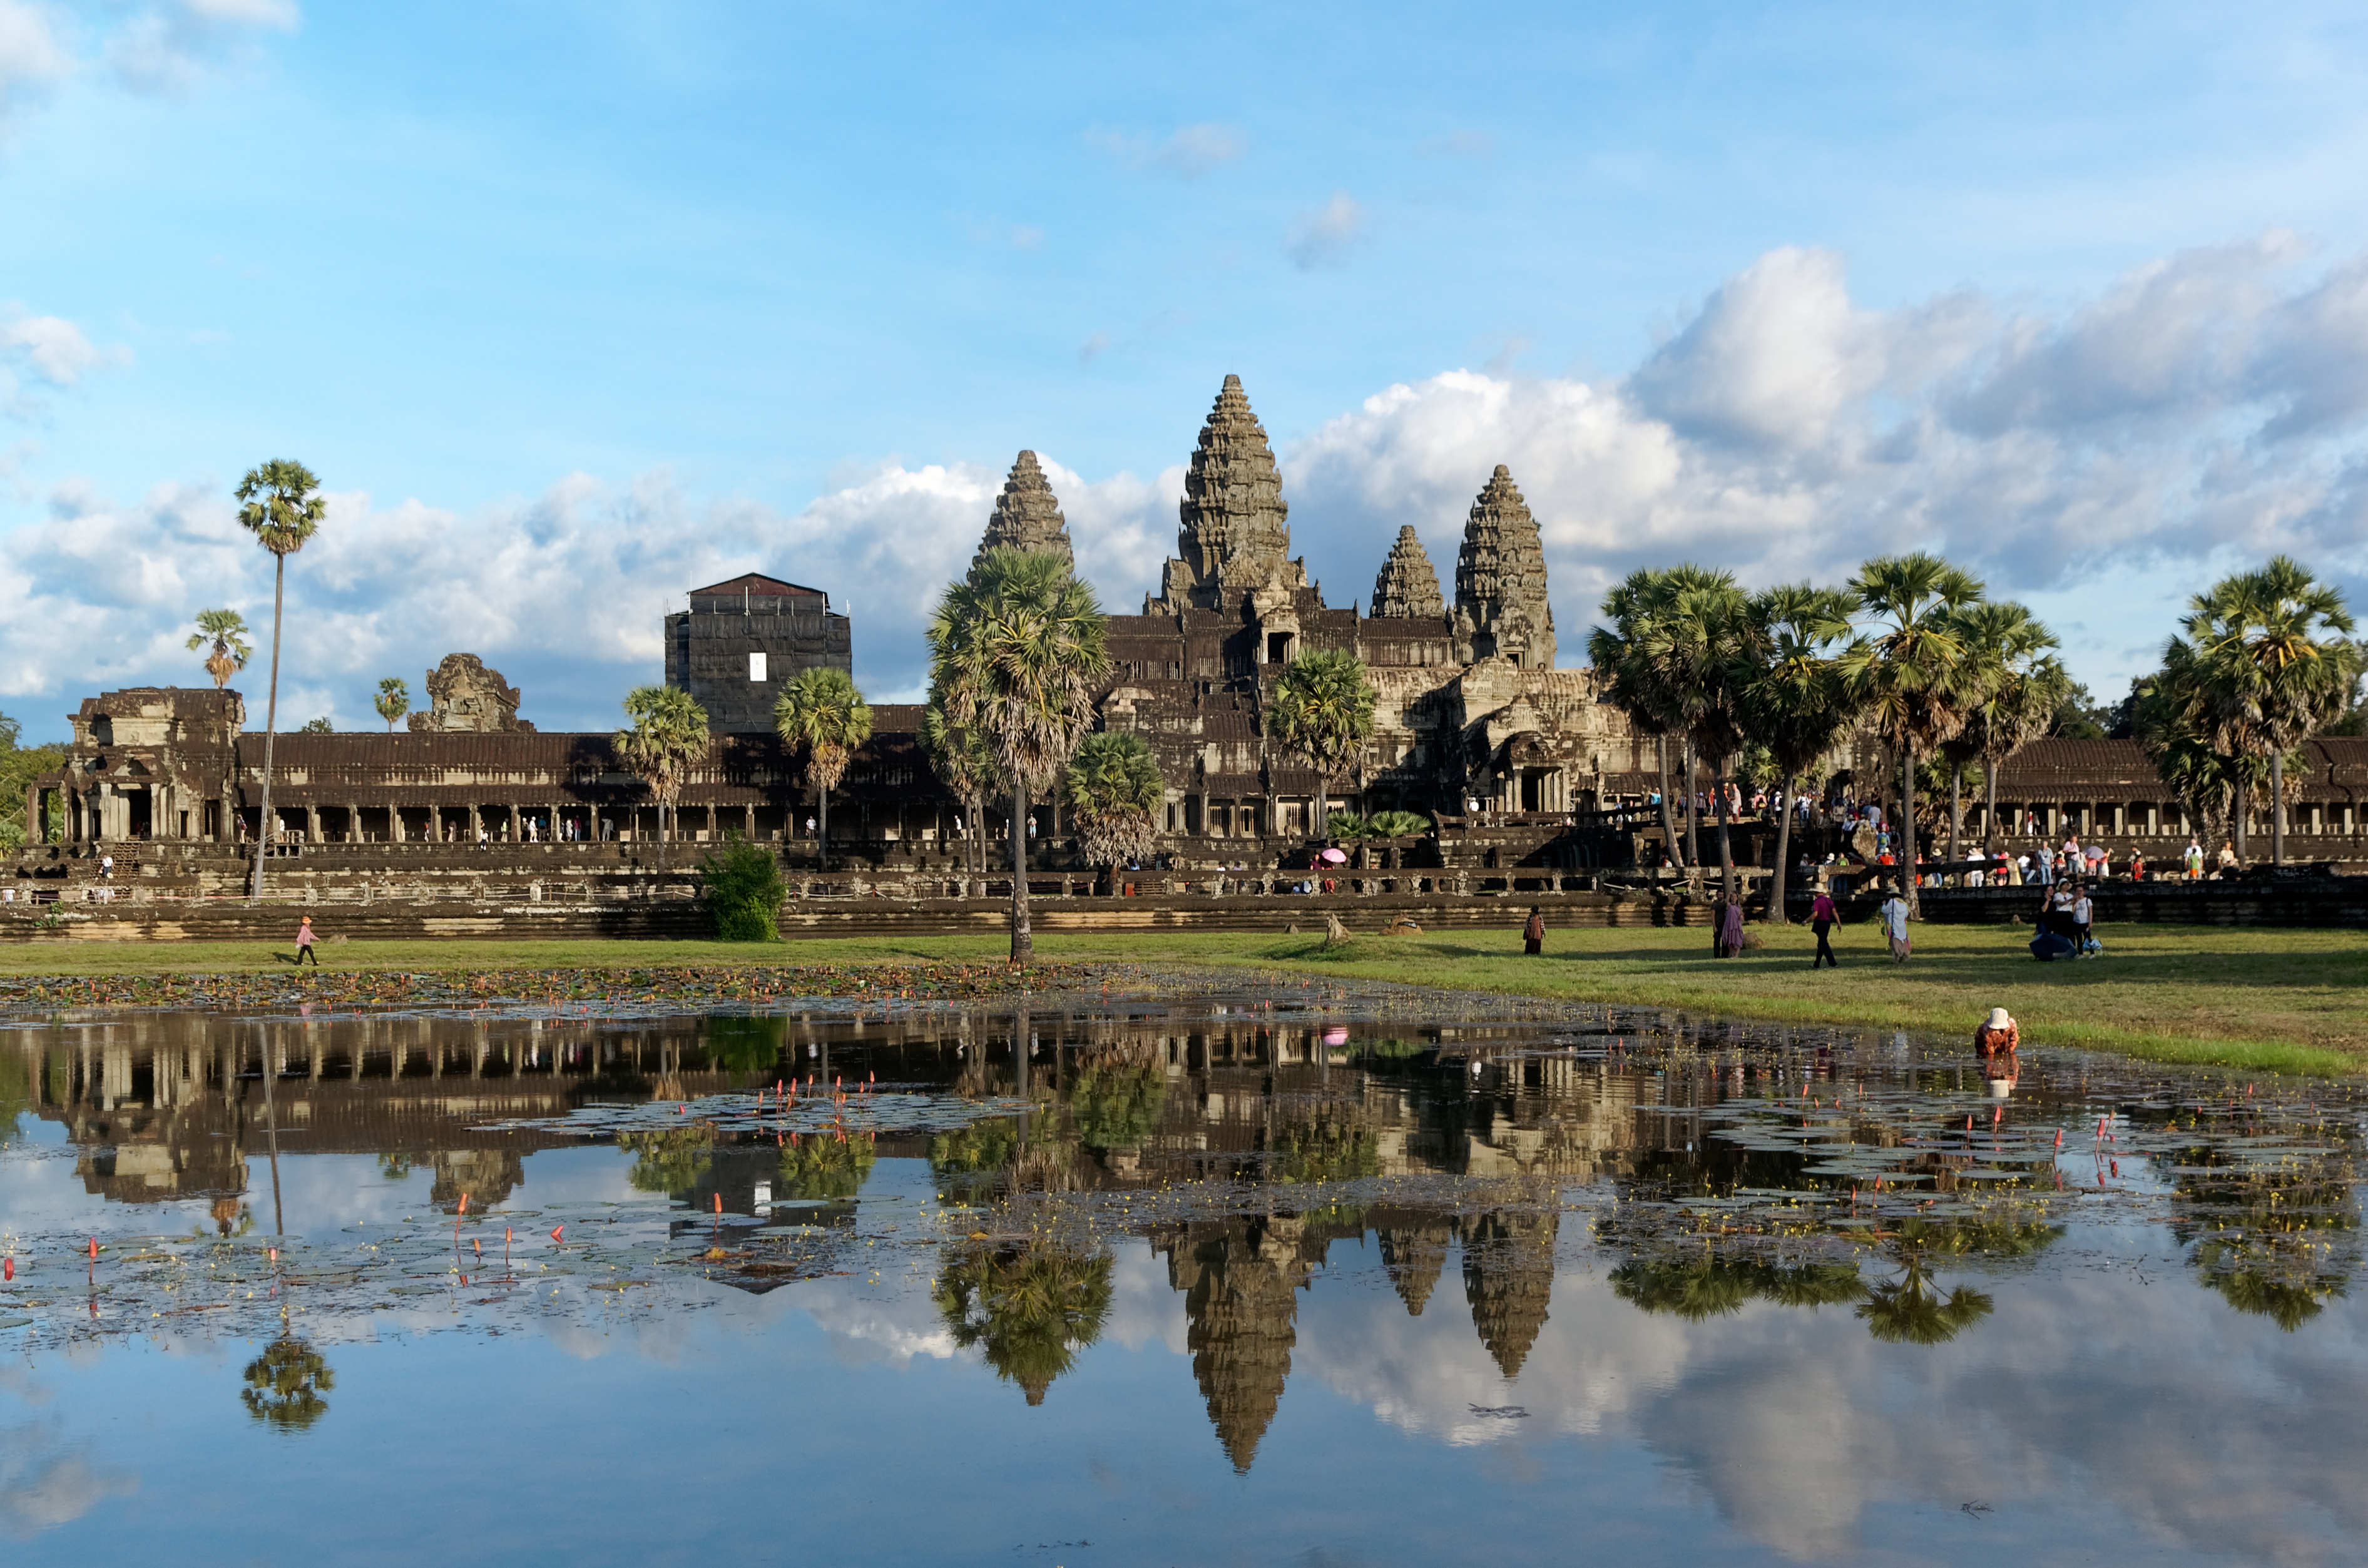 Border Thailand To Vietnam Via Angkor Wat ( 5 days)